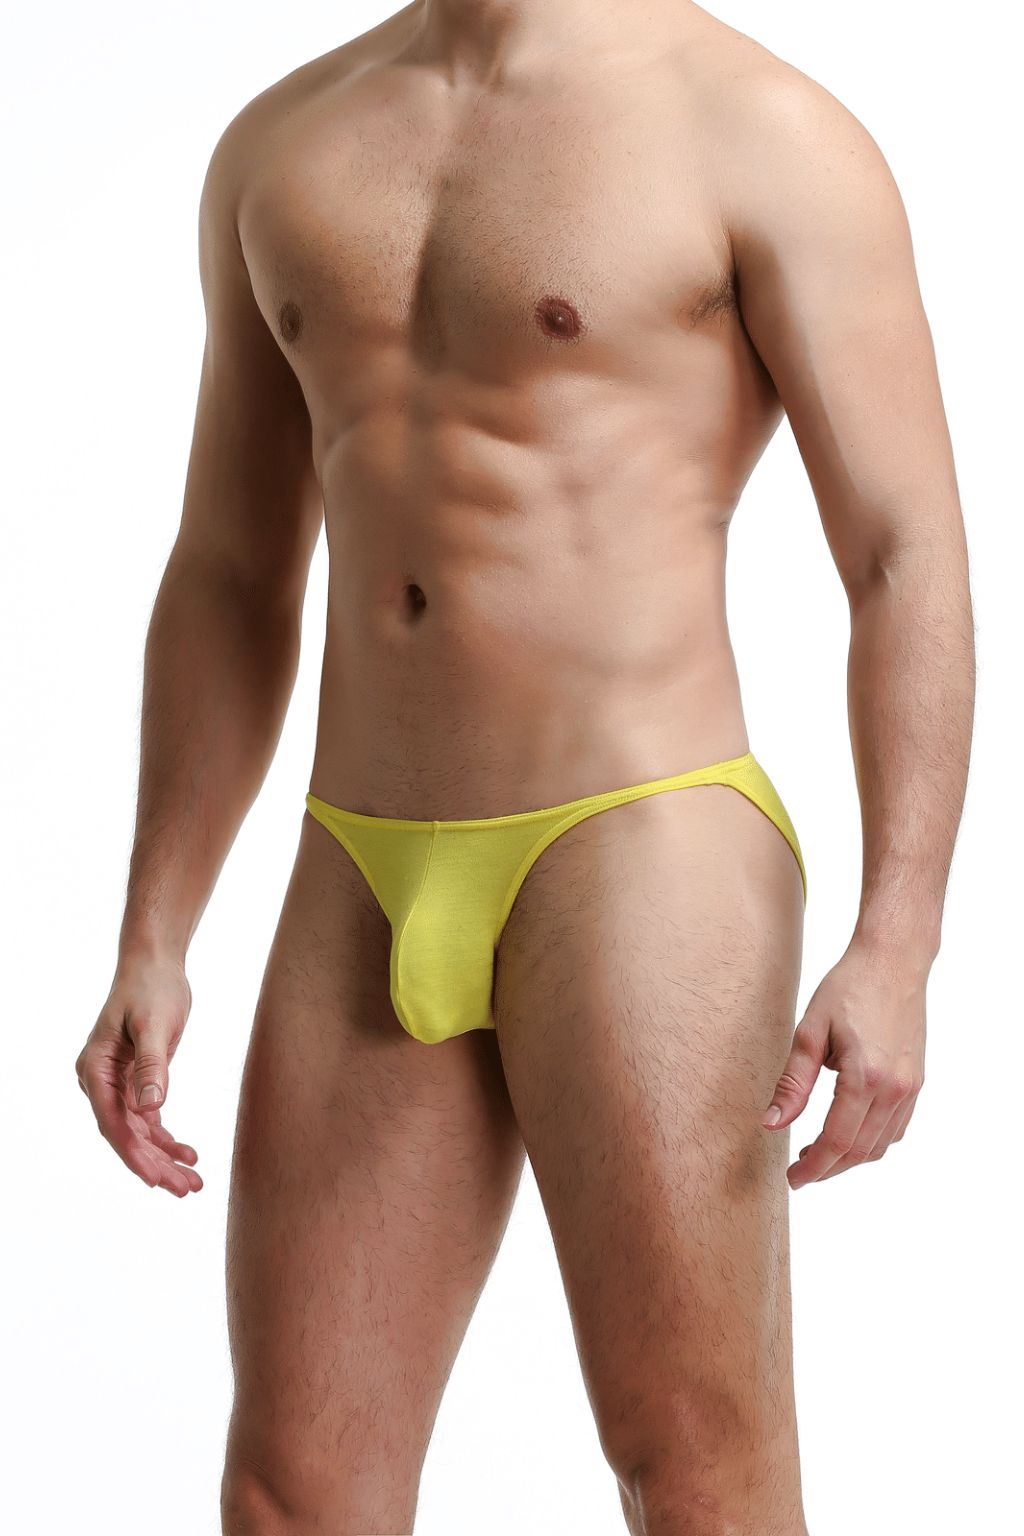 BfM Mens Mid-rise Pouch Bikini Tanga Underwear – Bodywear for Men